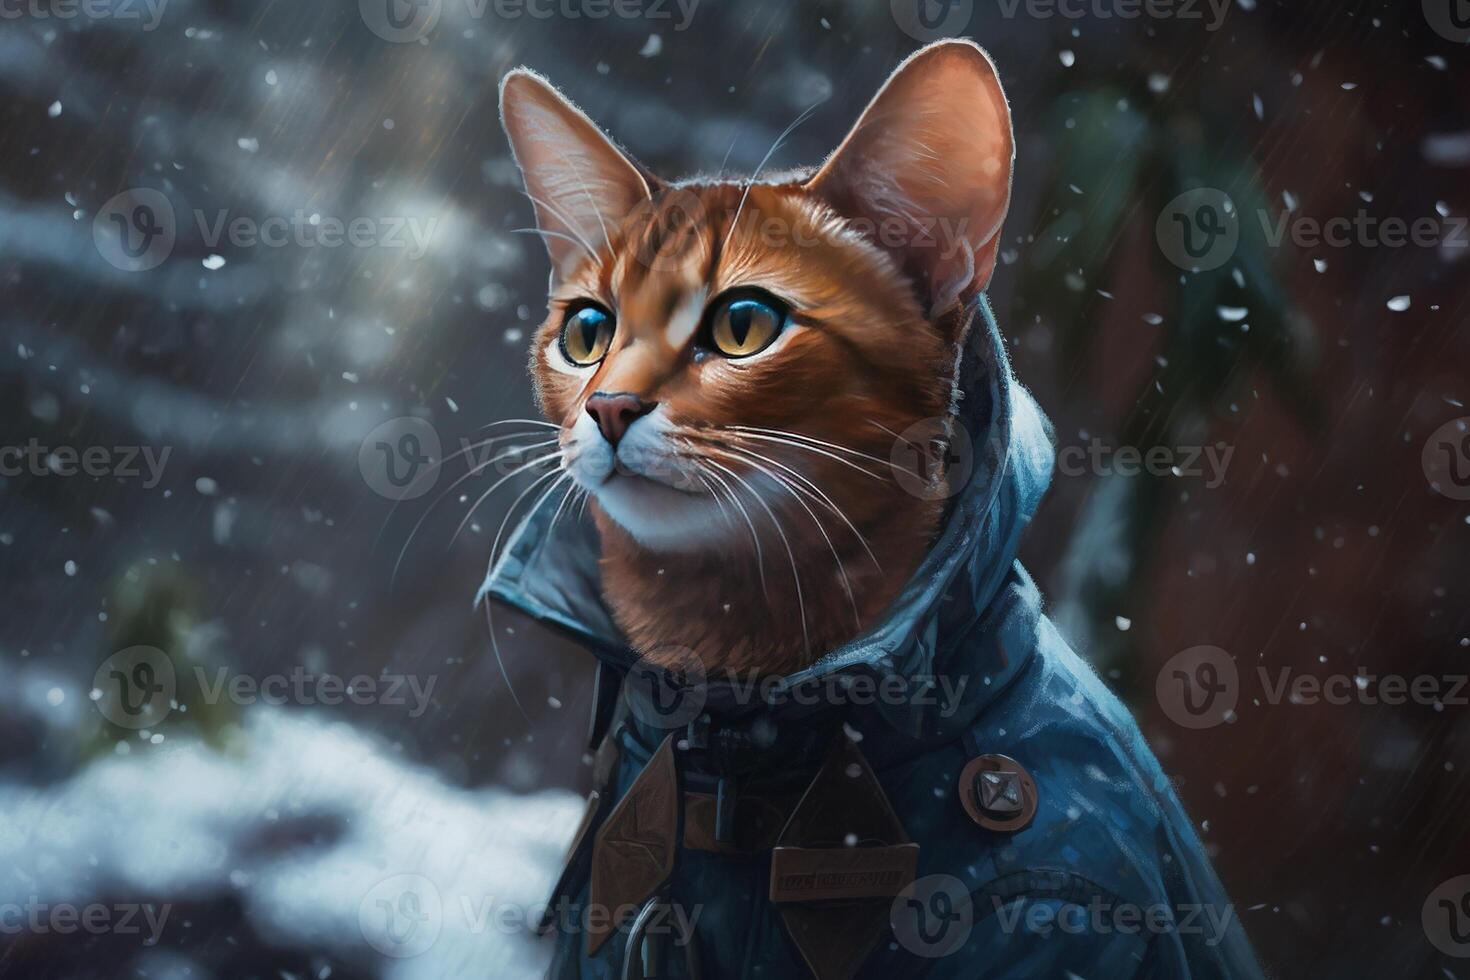 generativo ai, abisinio gato aventurero en invierno bosques petróleo pintura de linda mascota, animal vestir ropa. foto